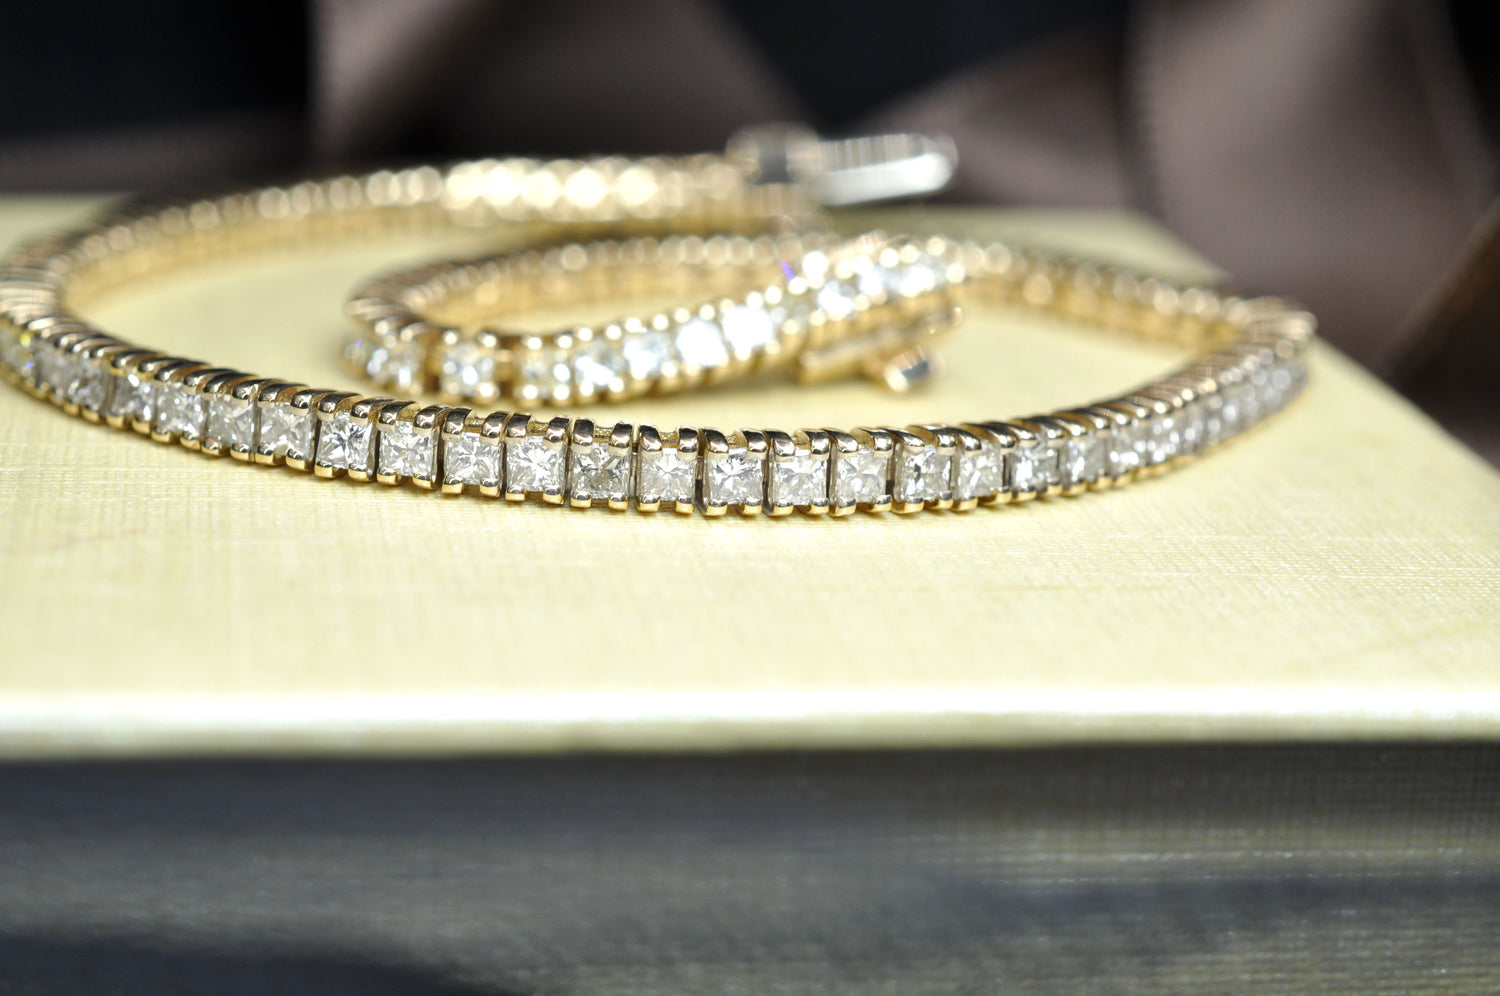 Bargain 5.00 CT Princess Cut Diamond Tennis Bracelet in 14KT Yellow Gold